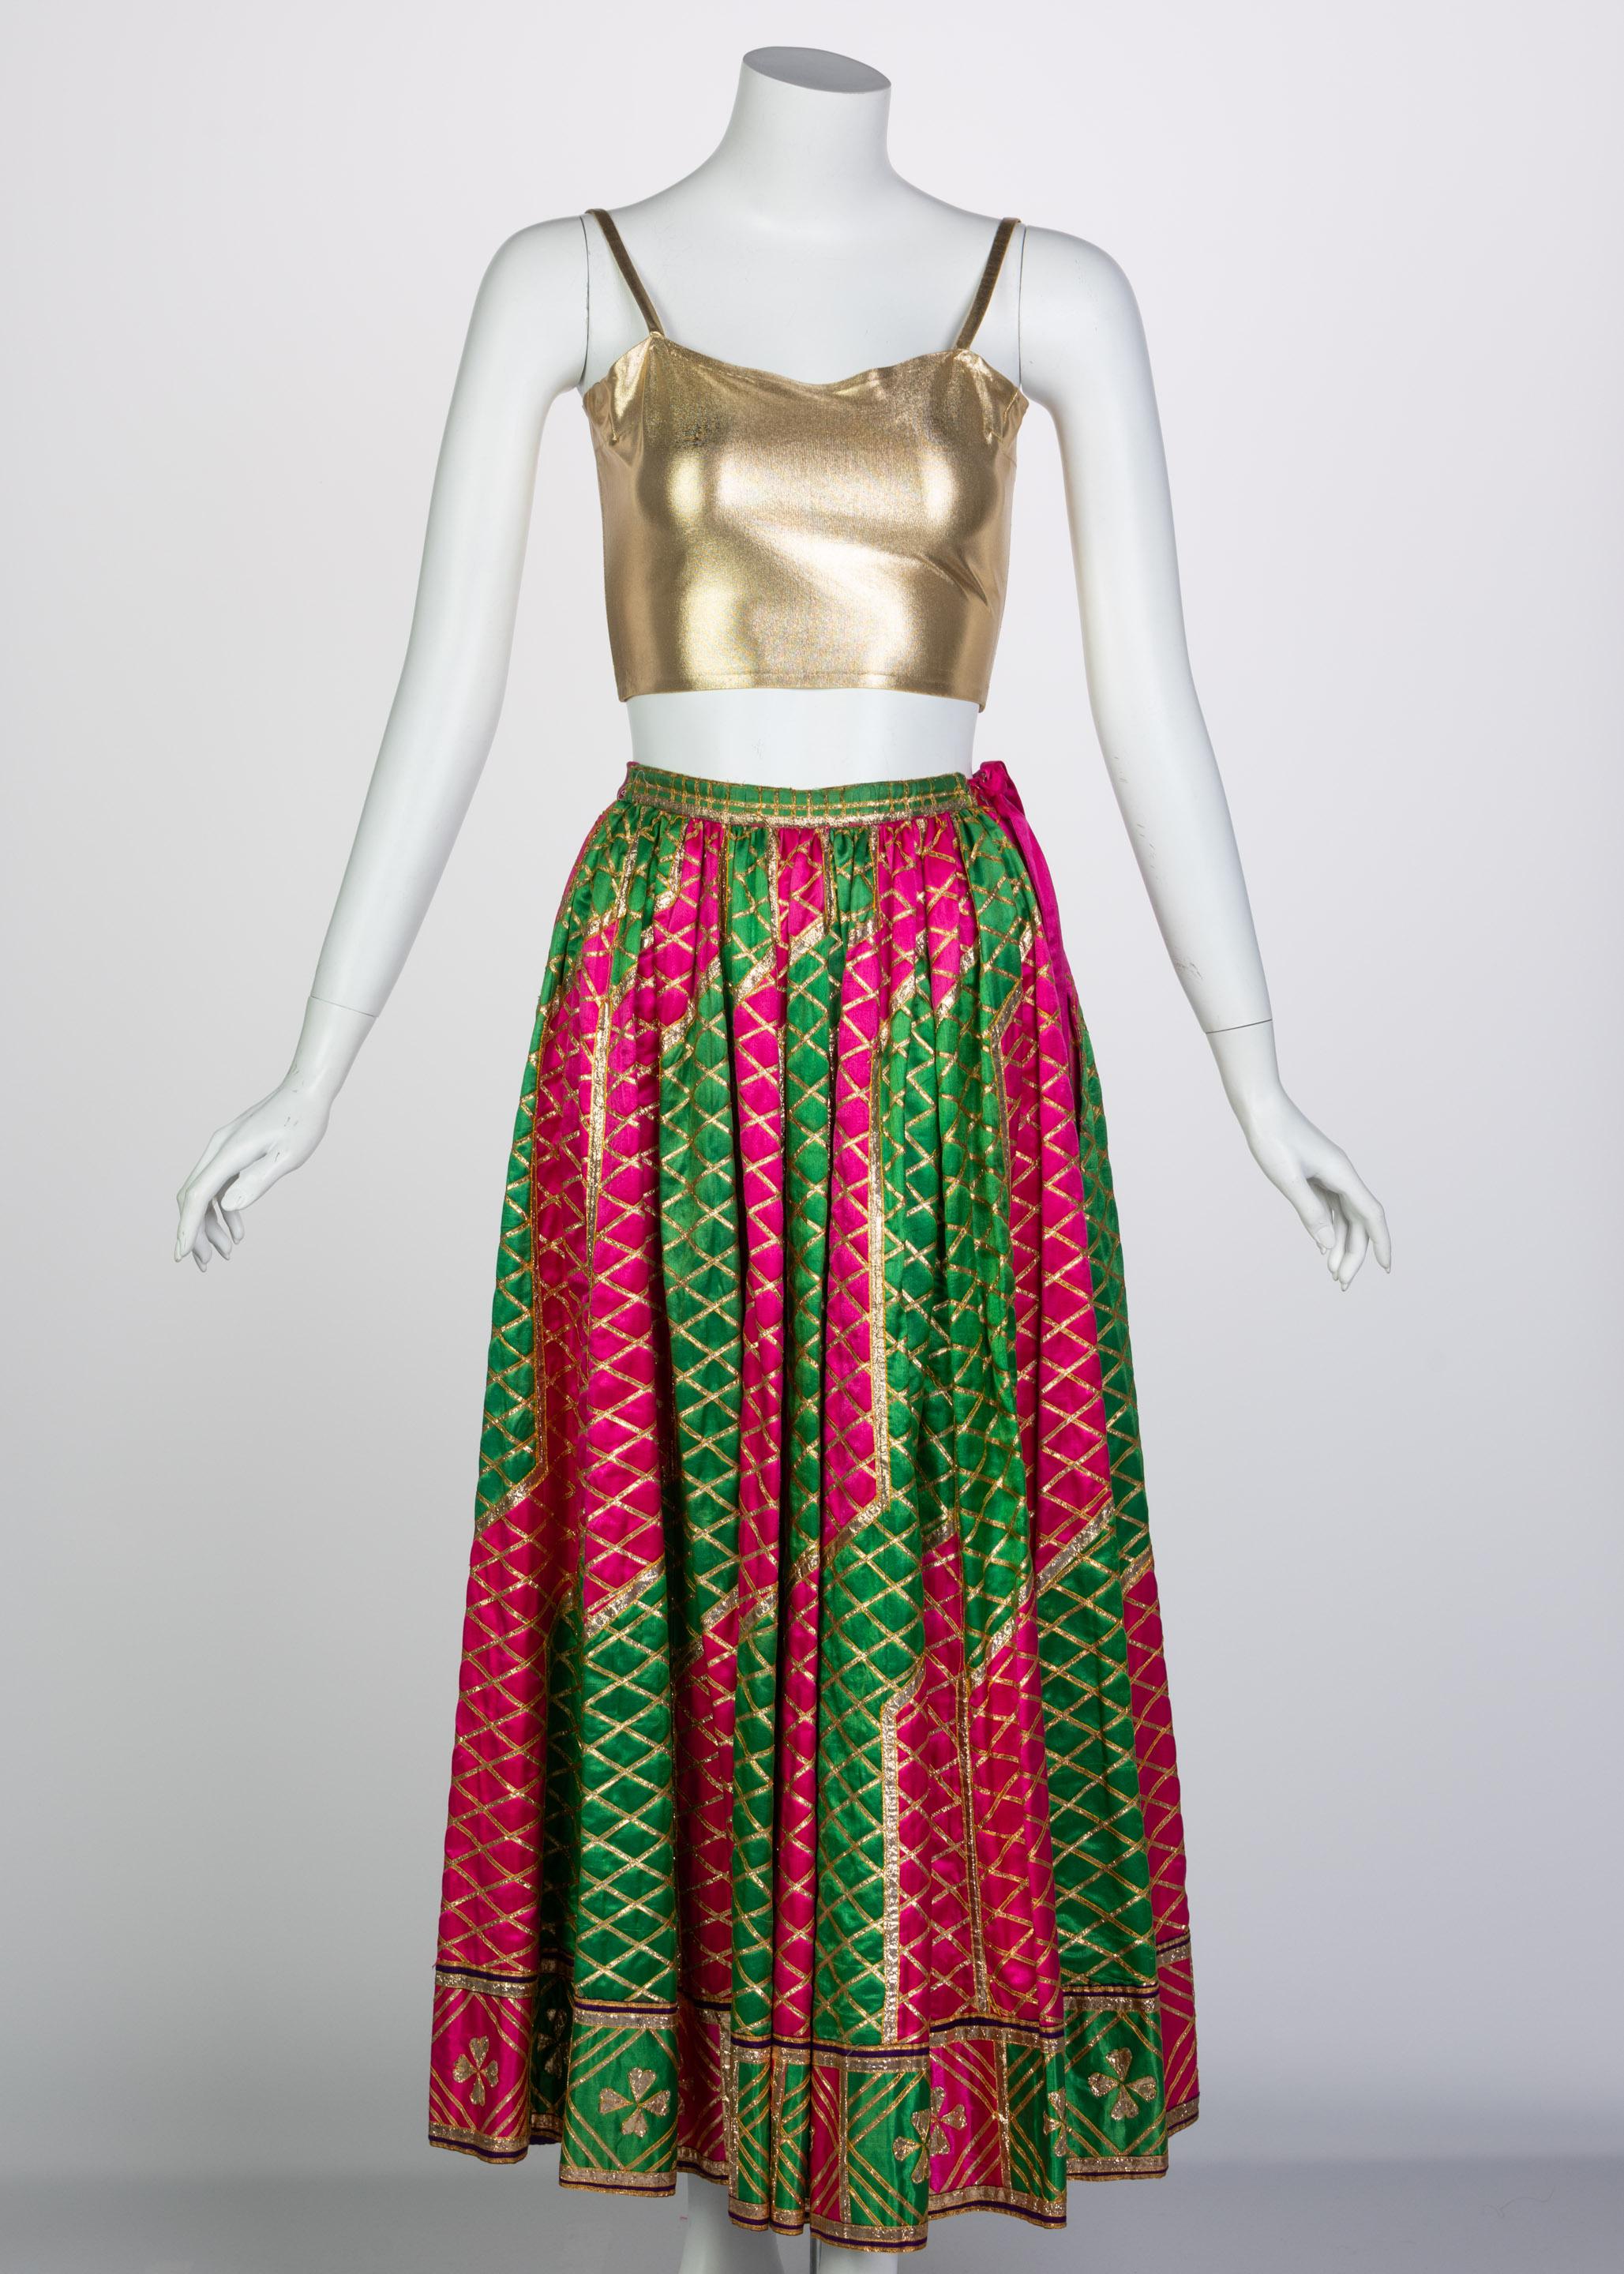 Brown Lanvin Haute Couture Gold Lame Top & Green Pink Peasant Skirt Ensemble, 1977